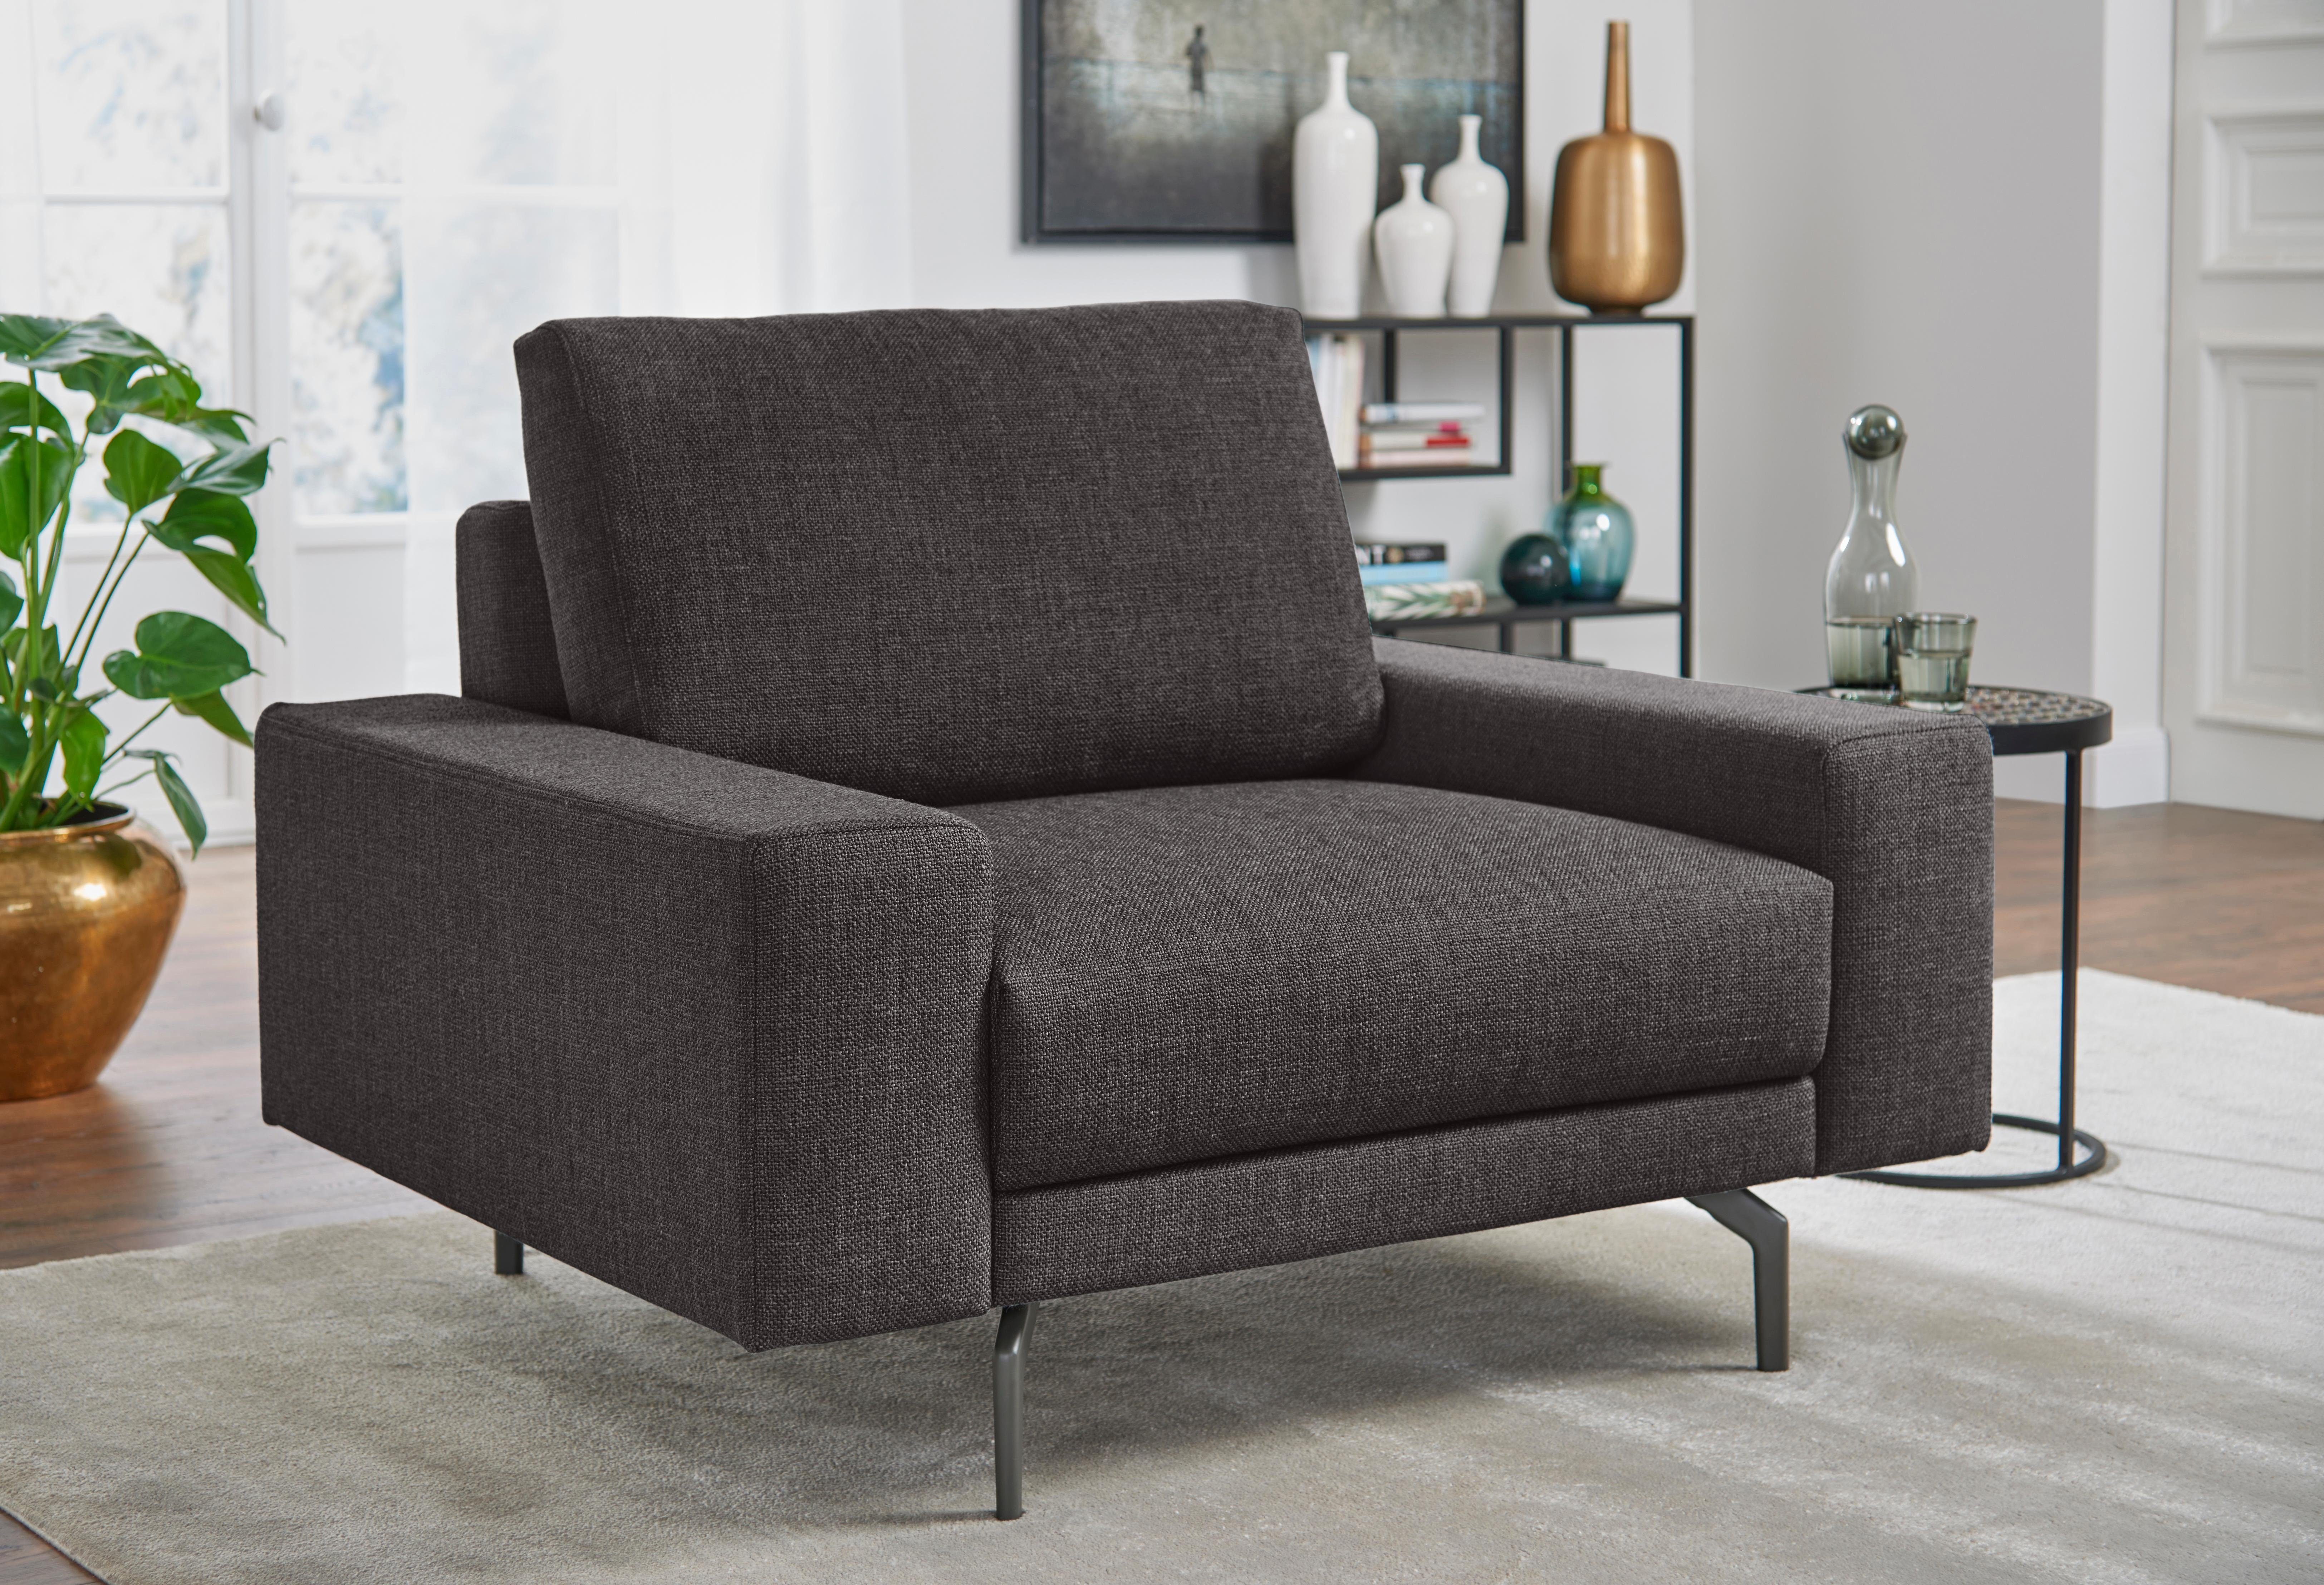 hülsta sofa Sessel hs.450, Armlehne Breite 120 umbragrau, cm in niedrig, breit Alugussfüße